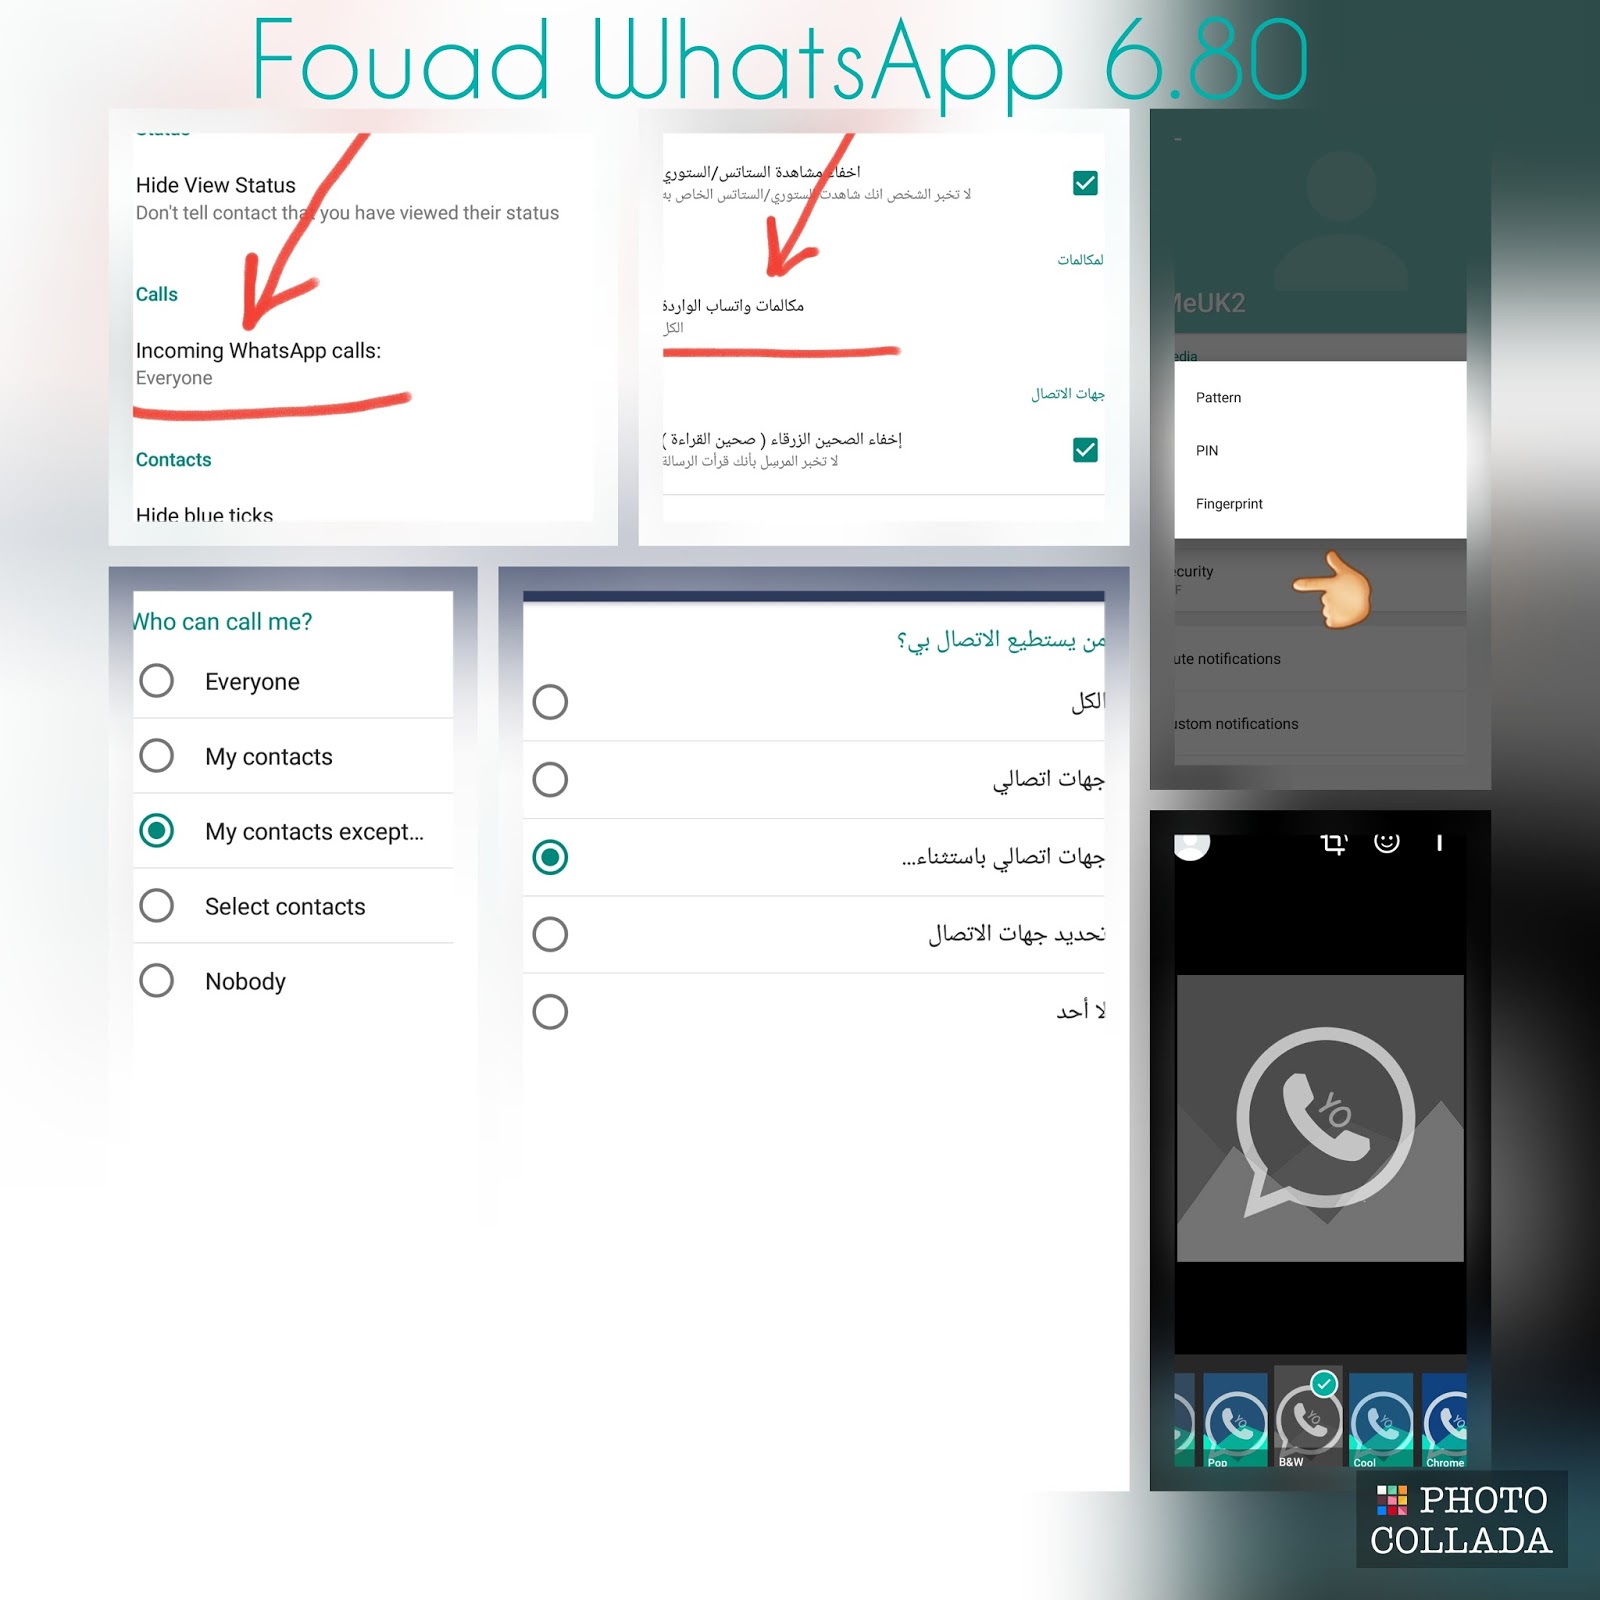 Fouad WhatsApp &amp; WhatsApp+ v6.80 Latest Version Download Now